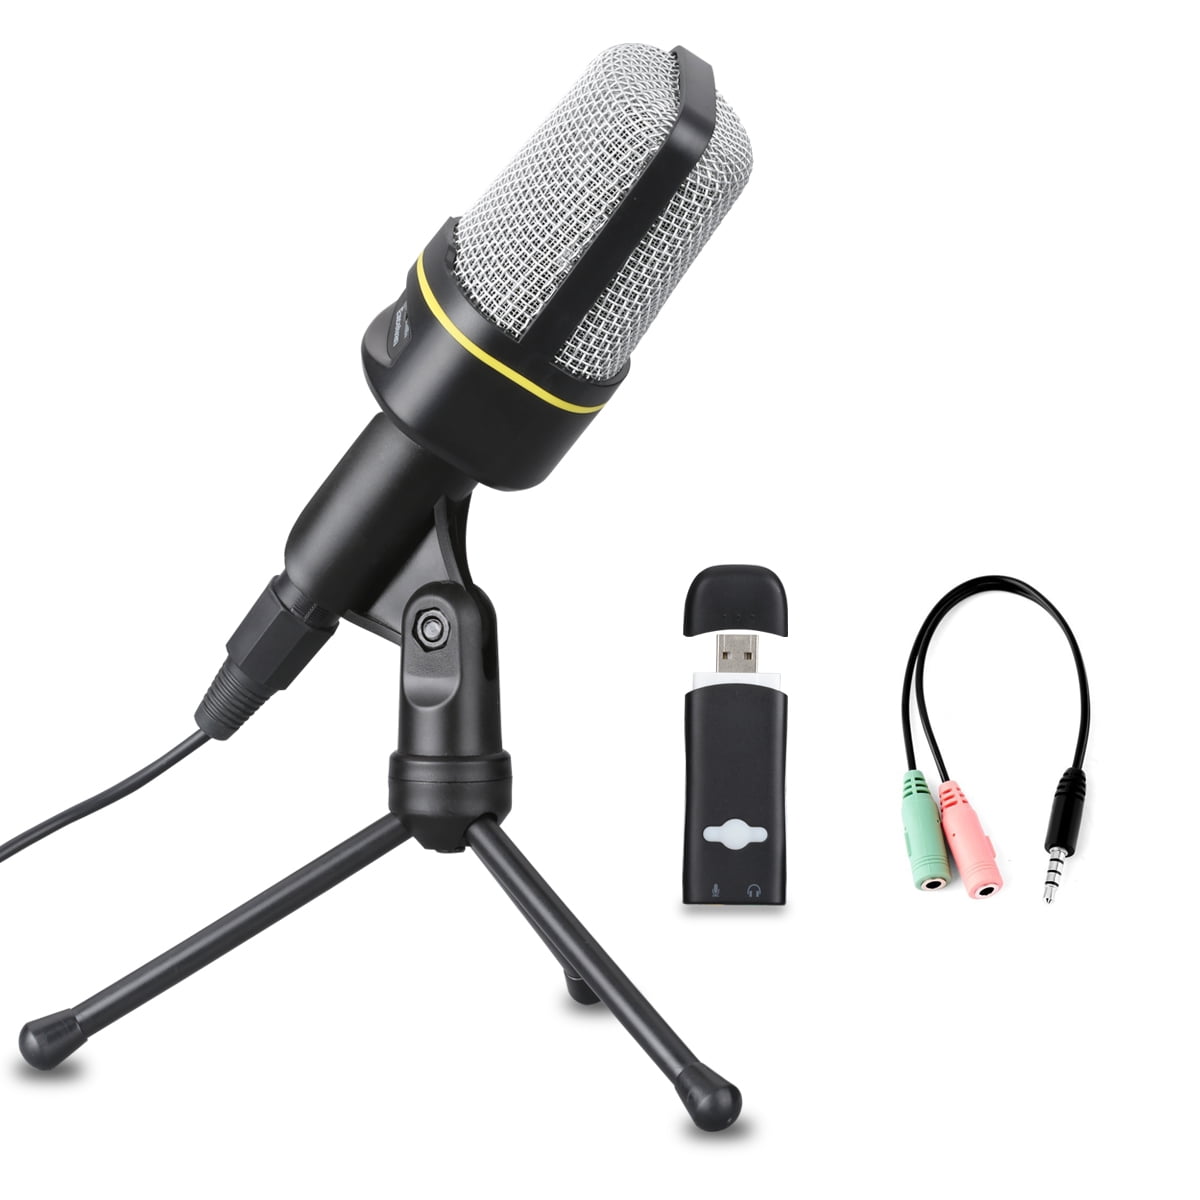 microphone volume reset to 50